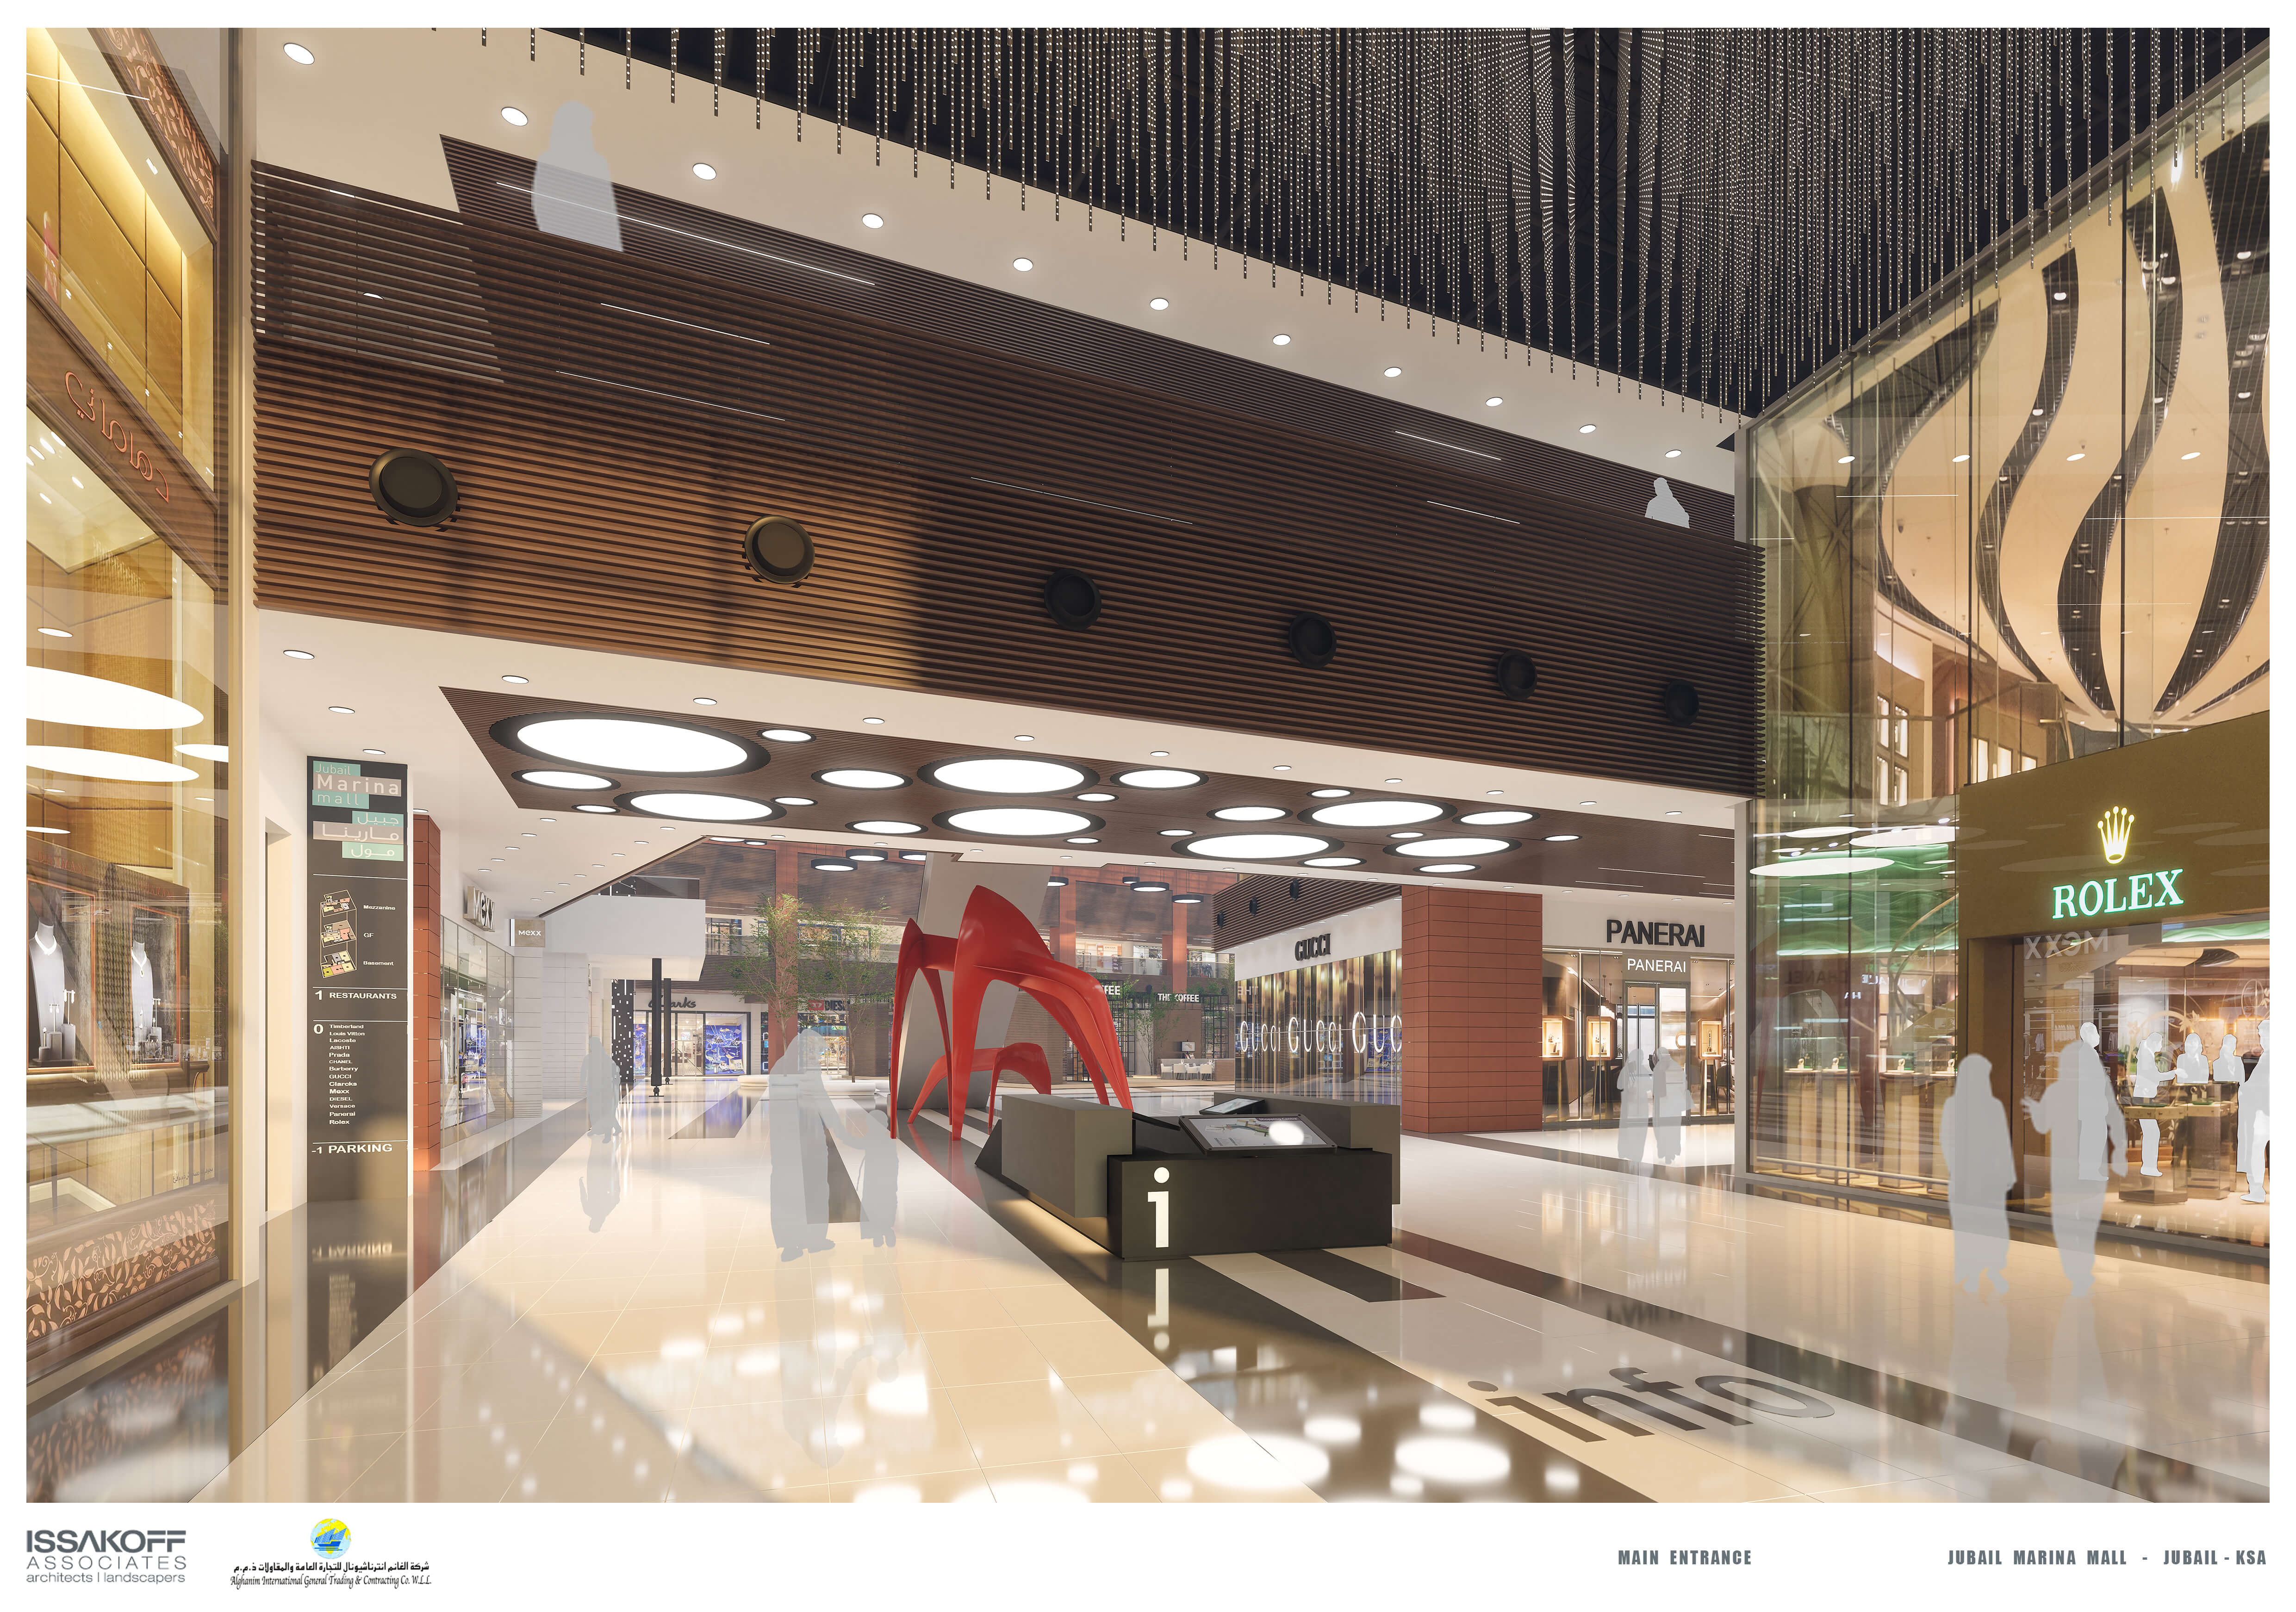 Arabian Centres signs Agreement with Alghanim International SA, Adding Jubail Marina Mall to its Portfolio  